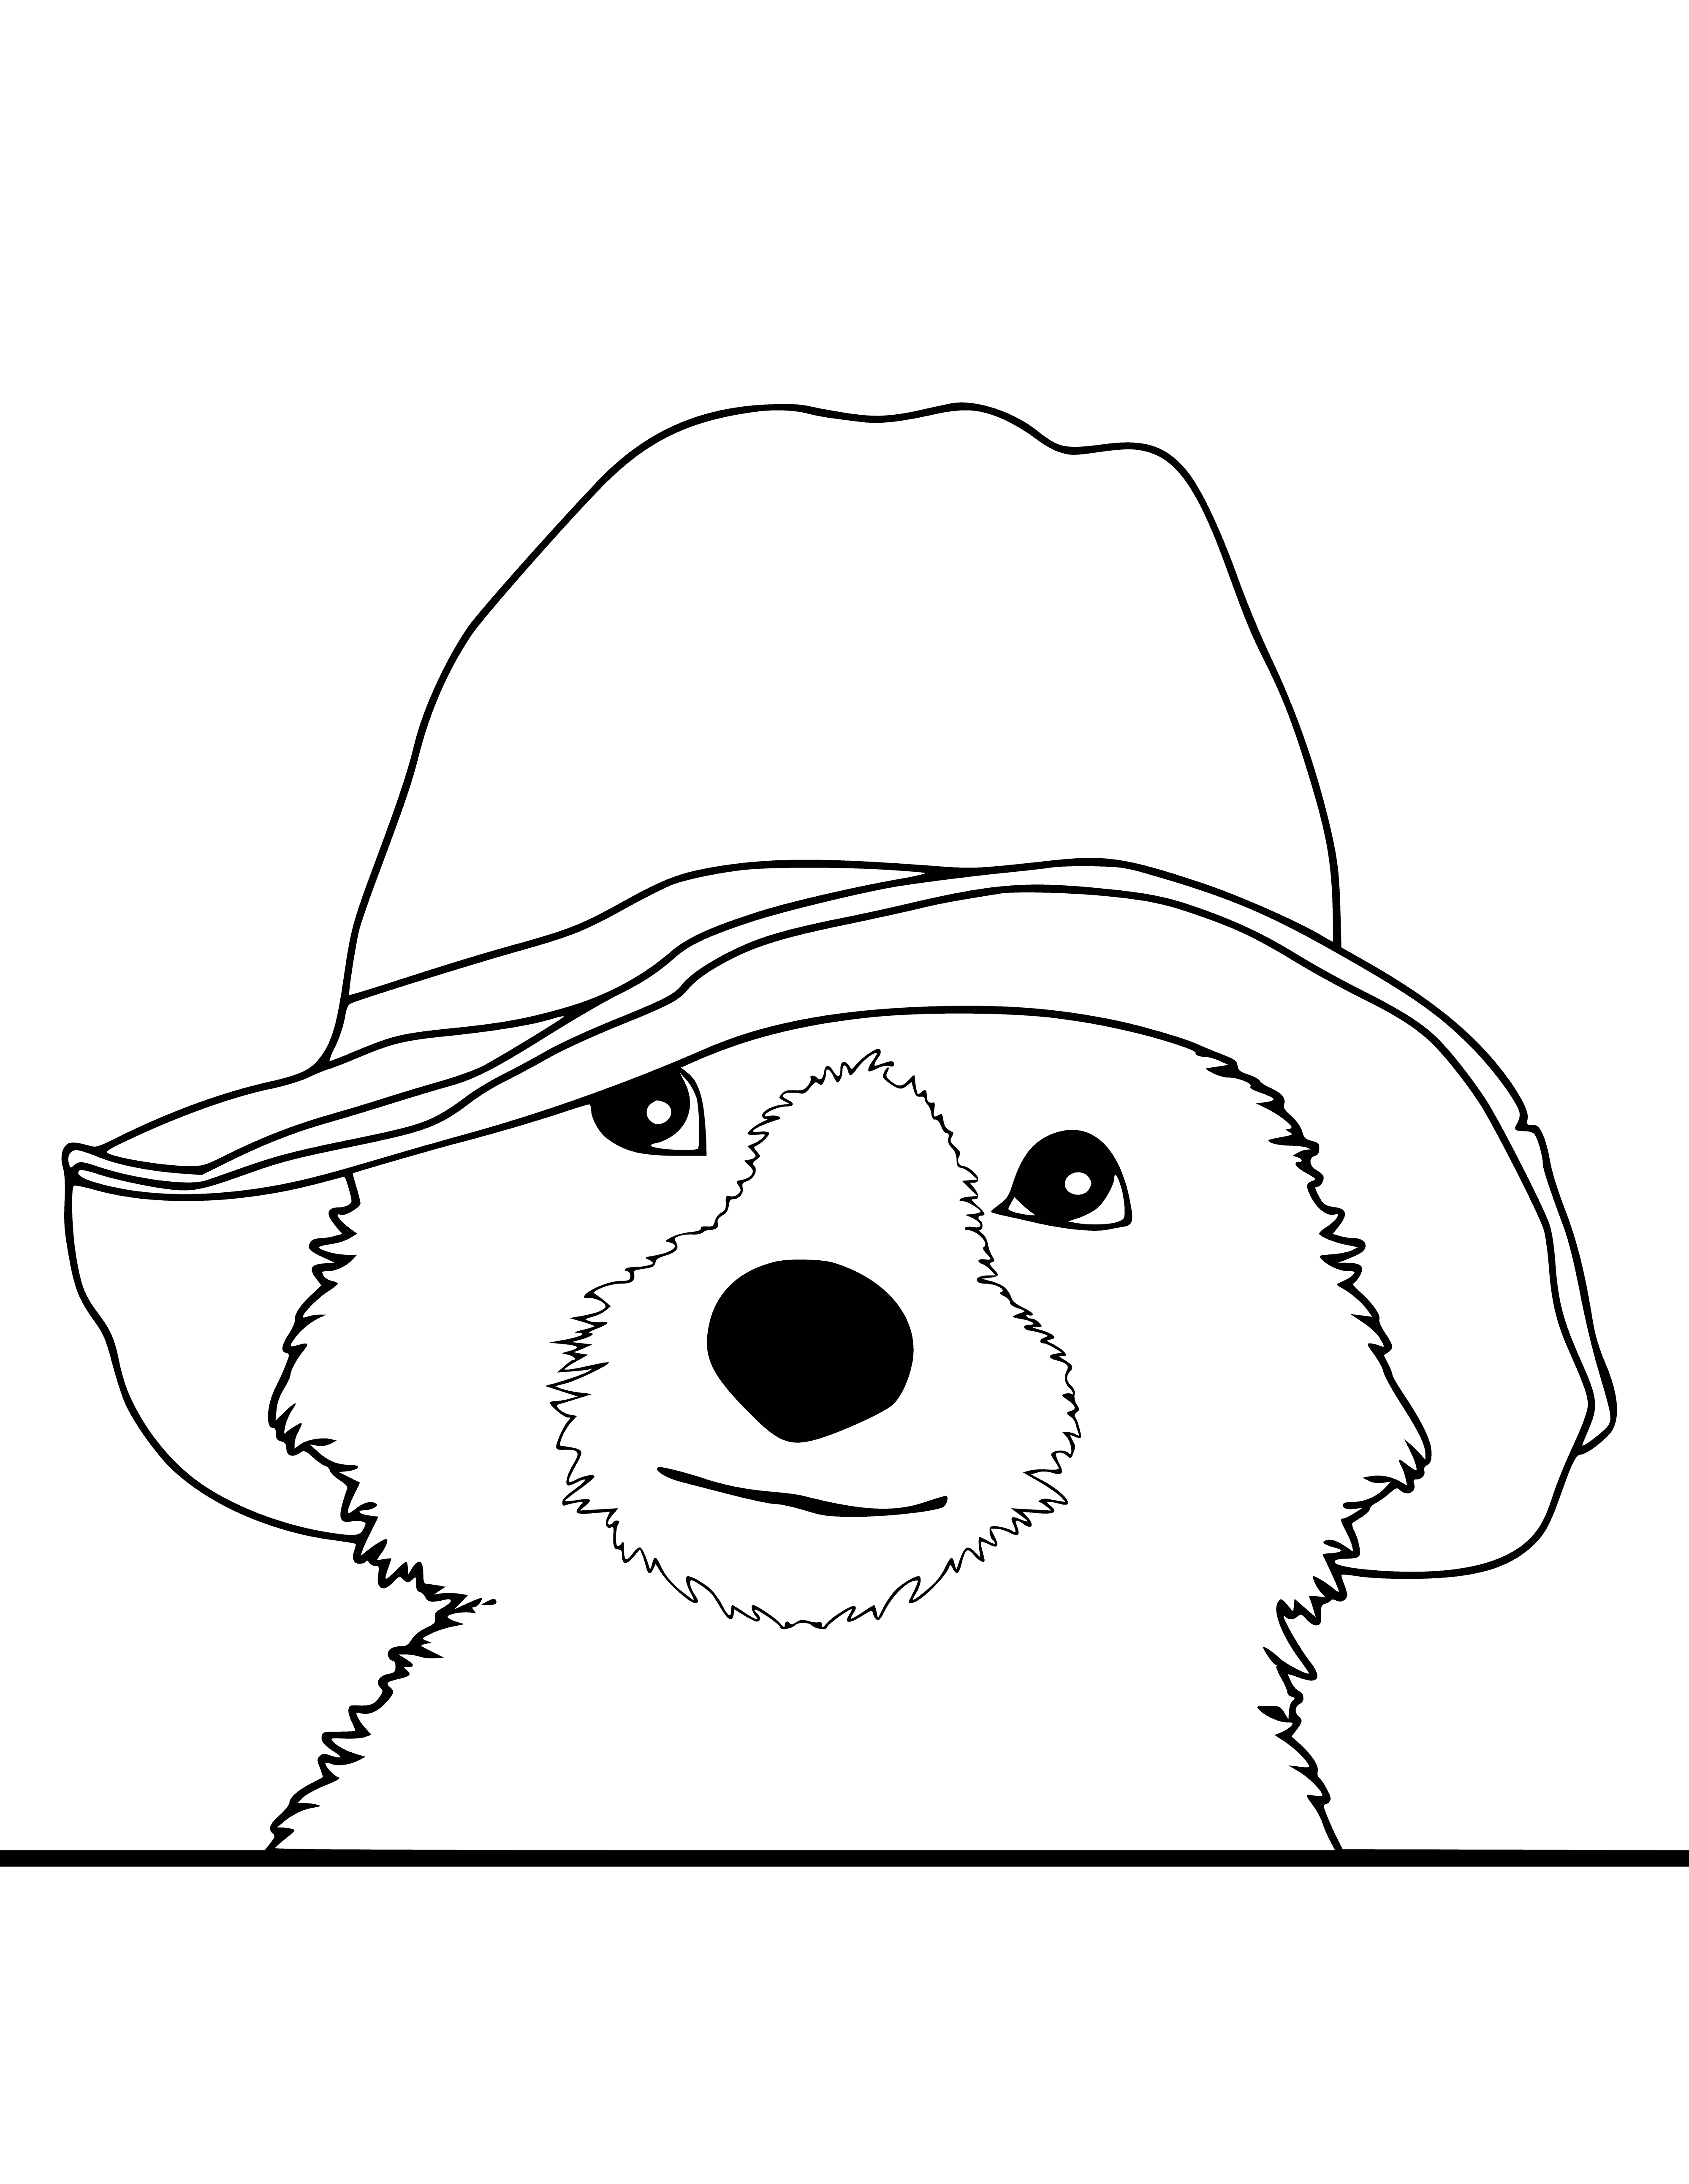 Paddington Bear coloring page